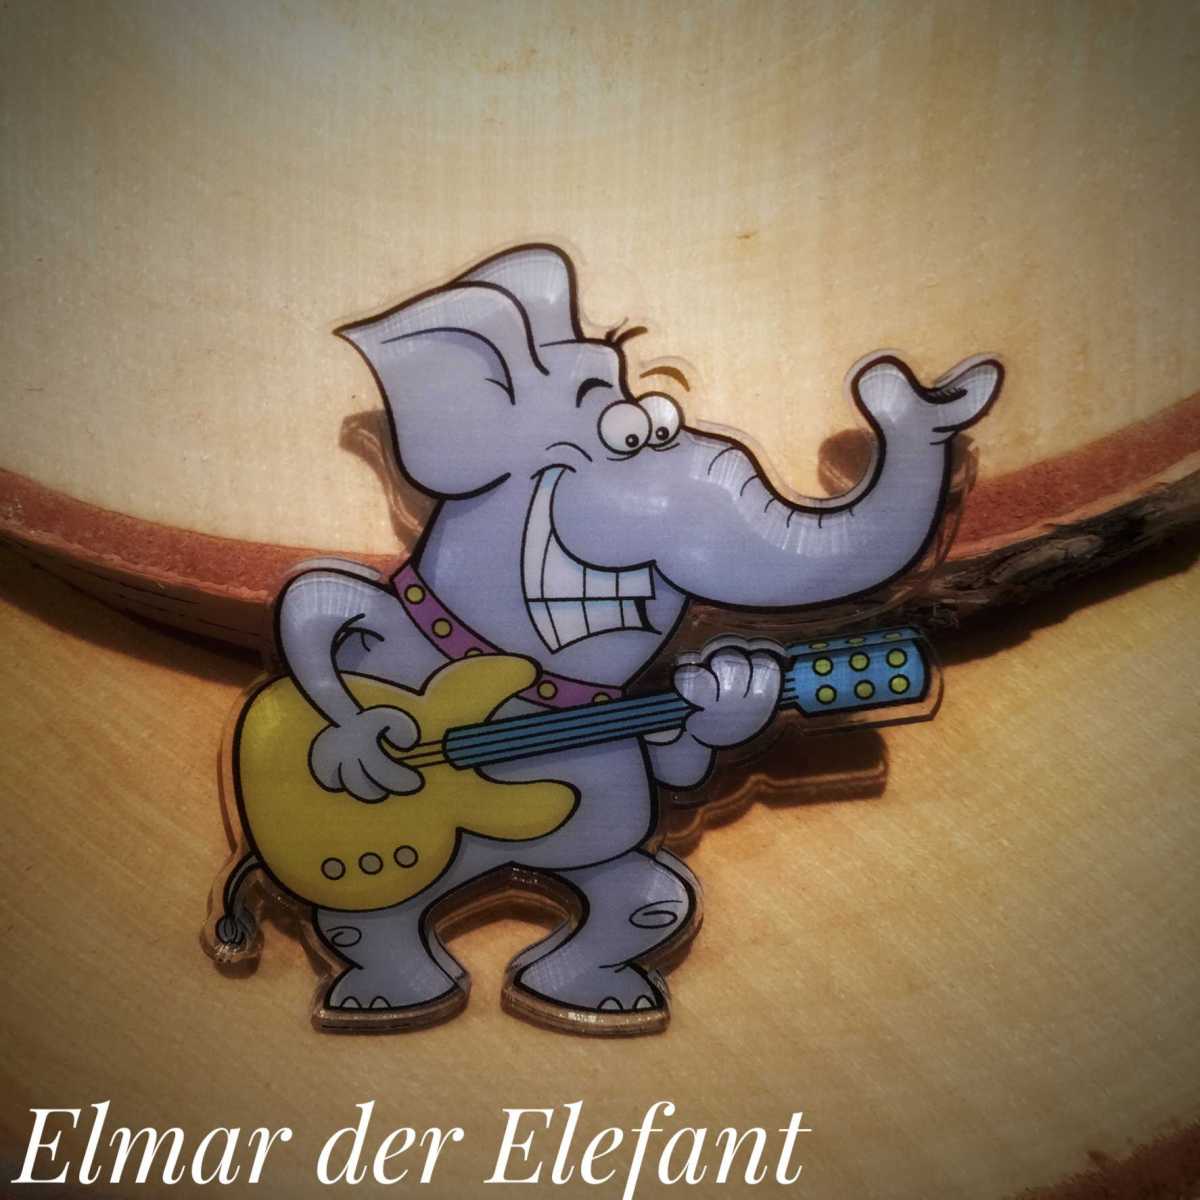 "Elmar der Elefant"